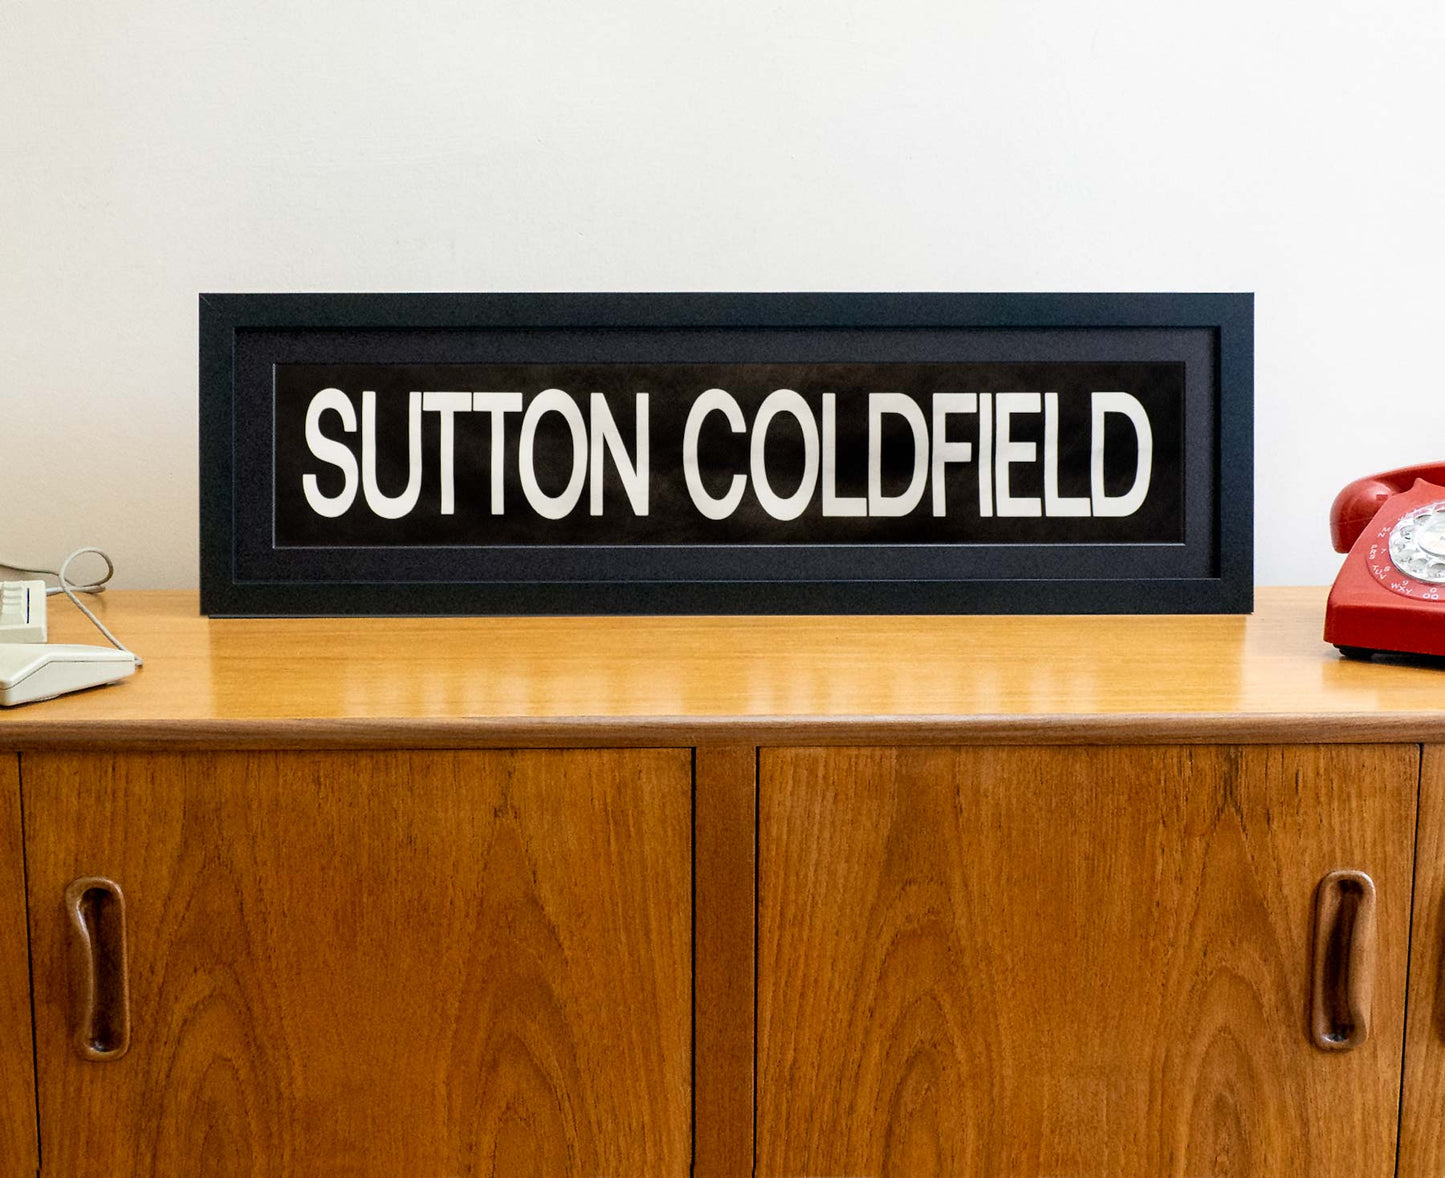 Sutton Coldfield 1990s framed original bus blind